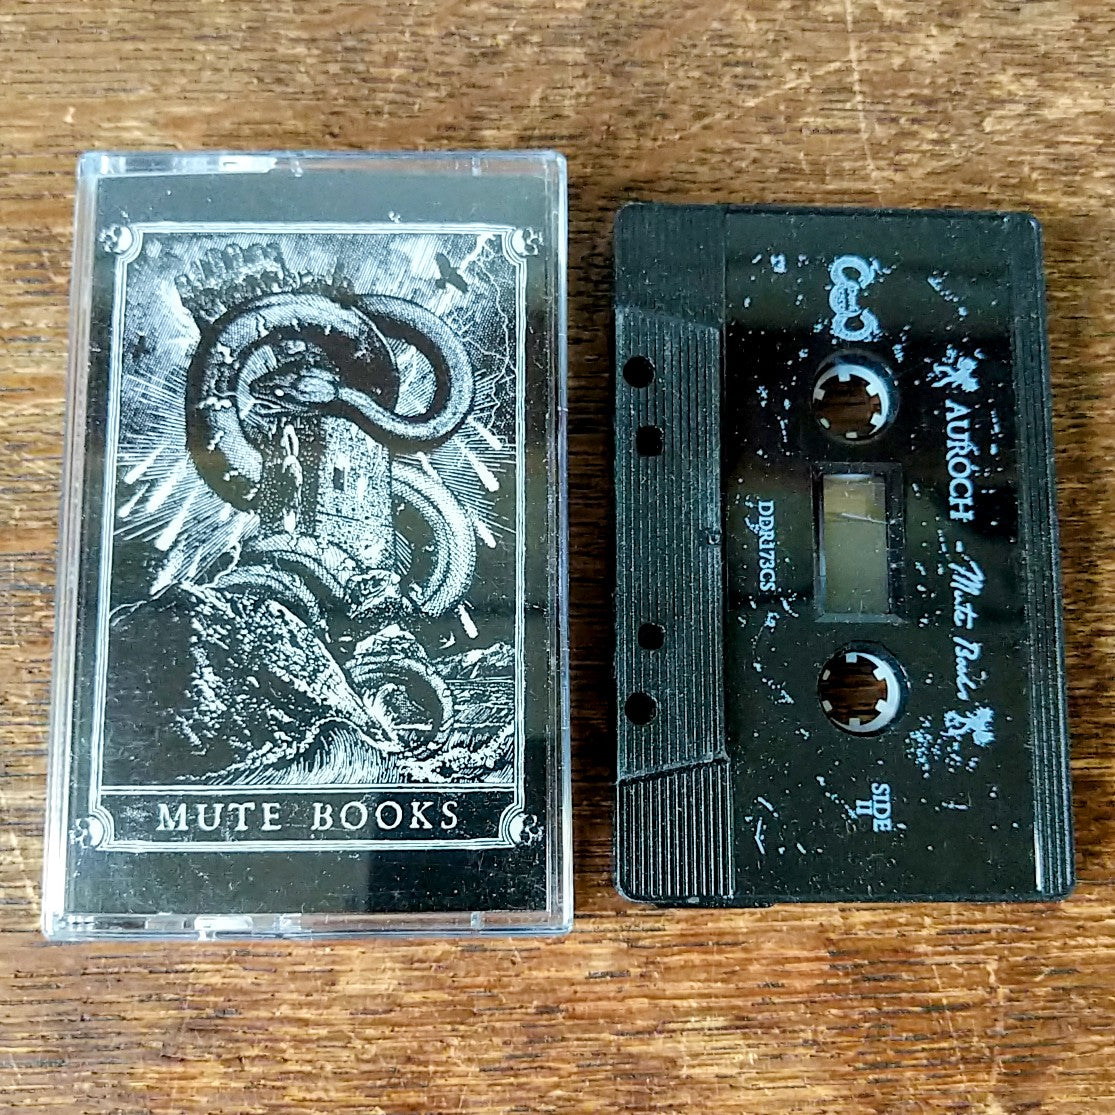 [SOLD OUT] AUROCH "Mute Books" Cassette Tape